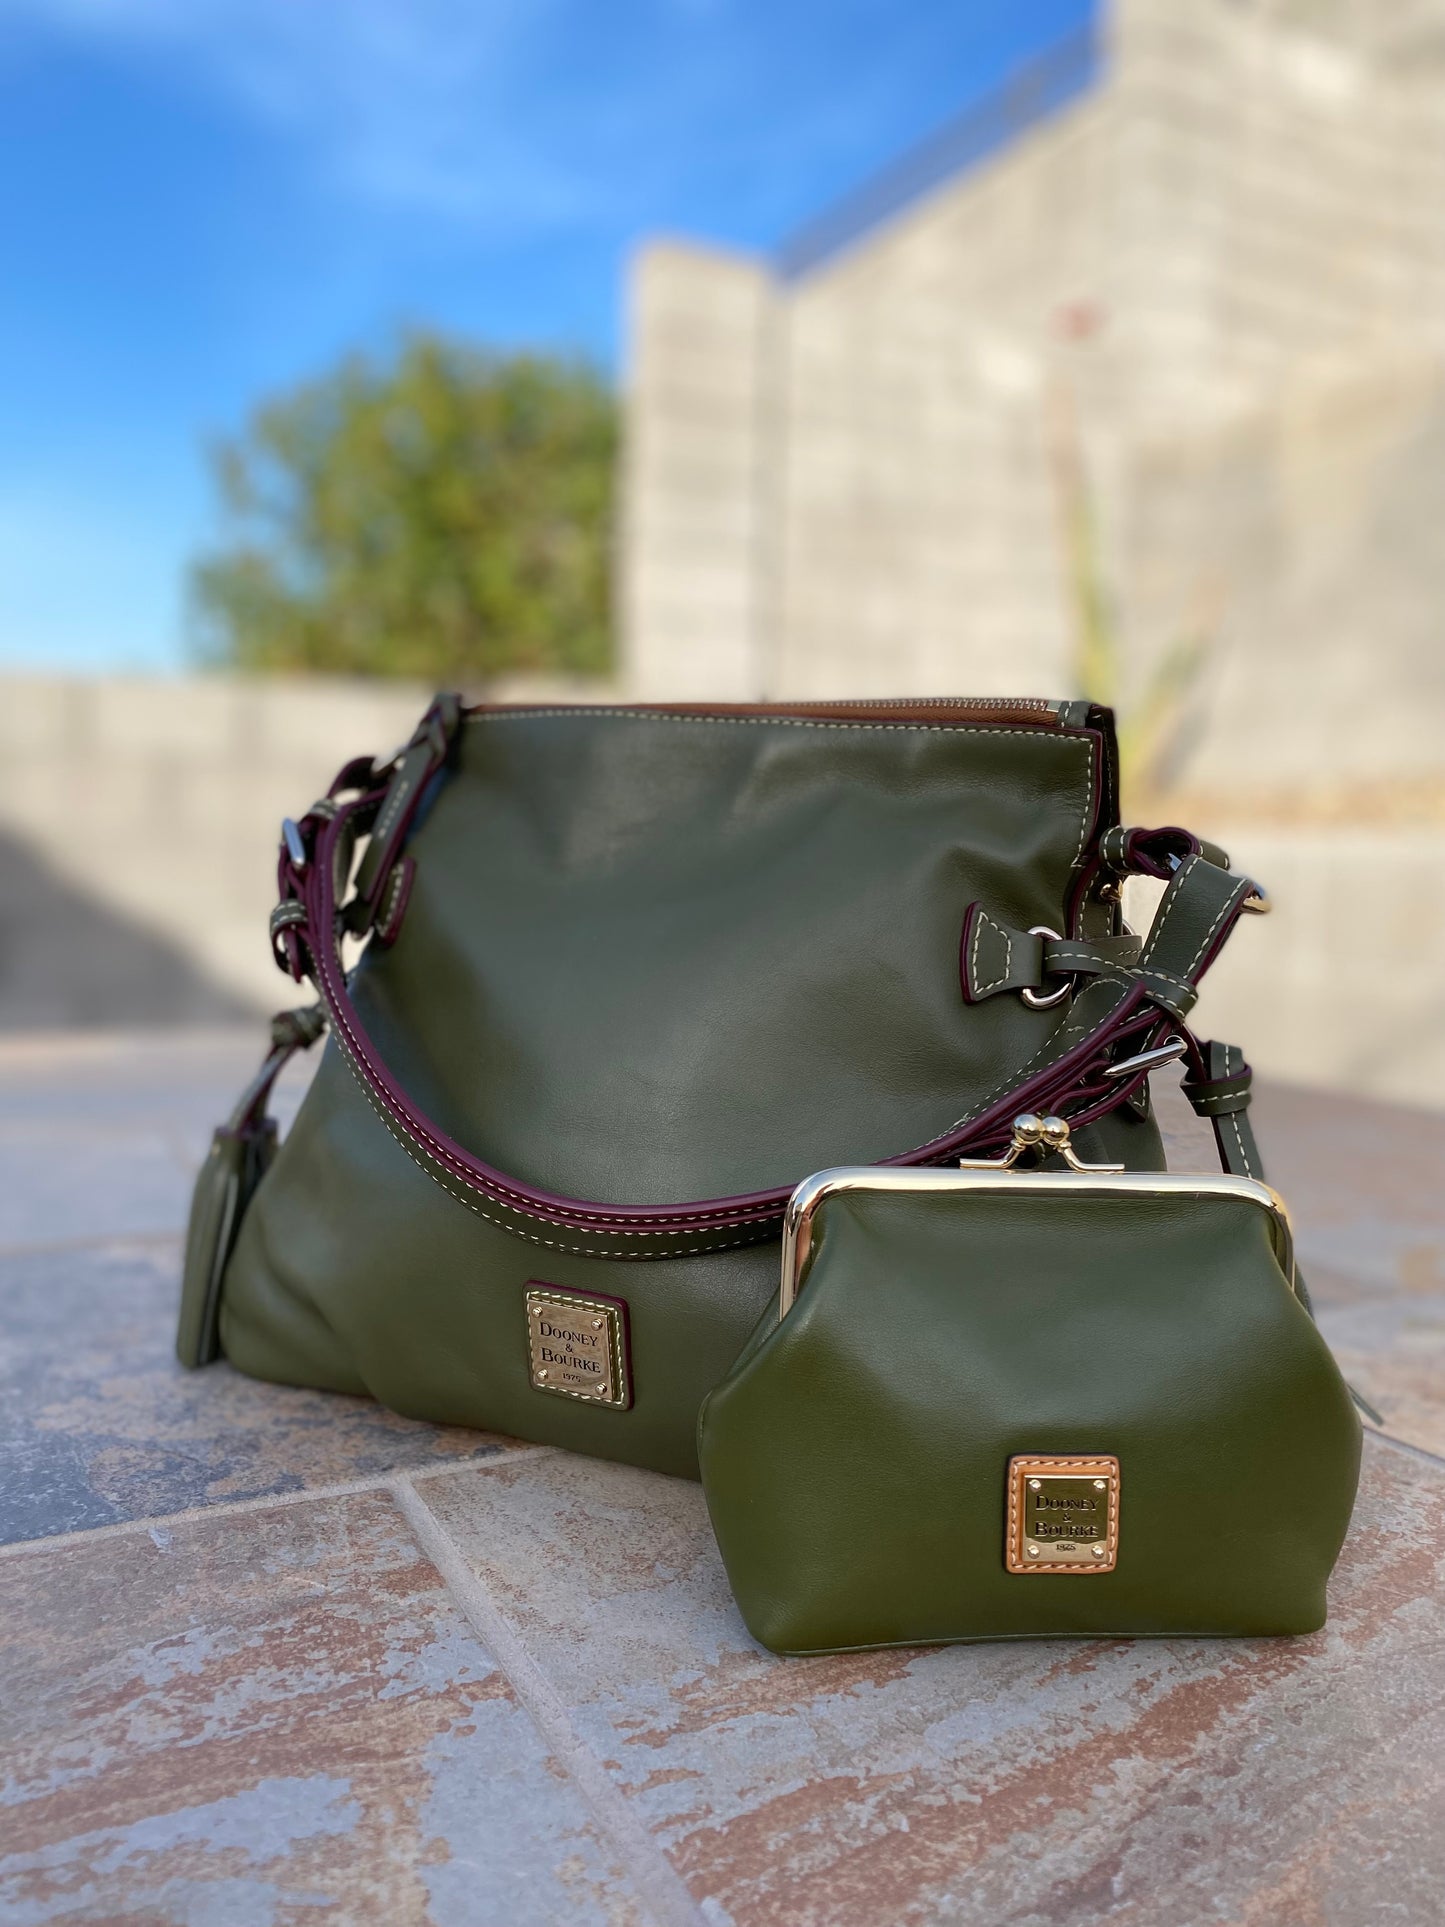 Dooney & Bourke Tegan Leather Hobo Bag with Wallet